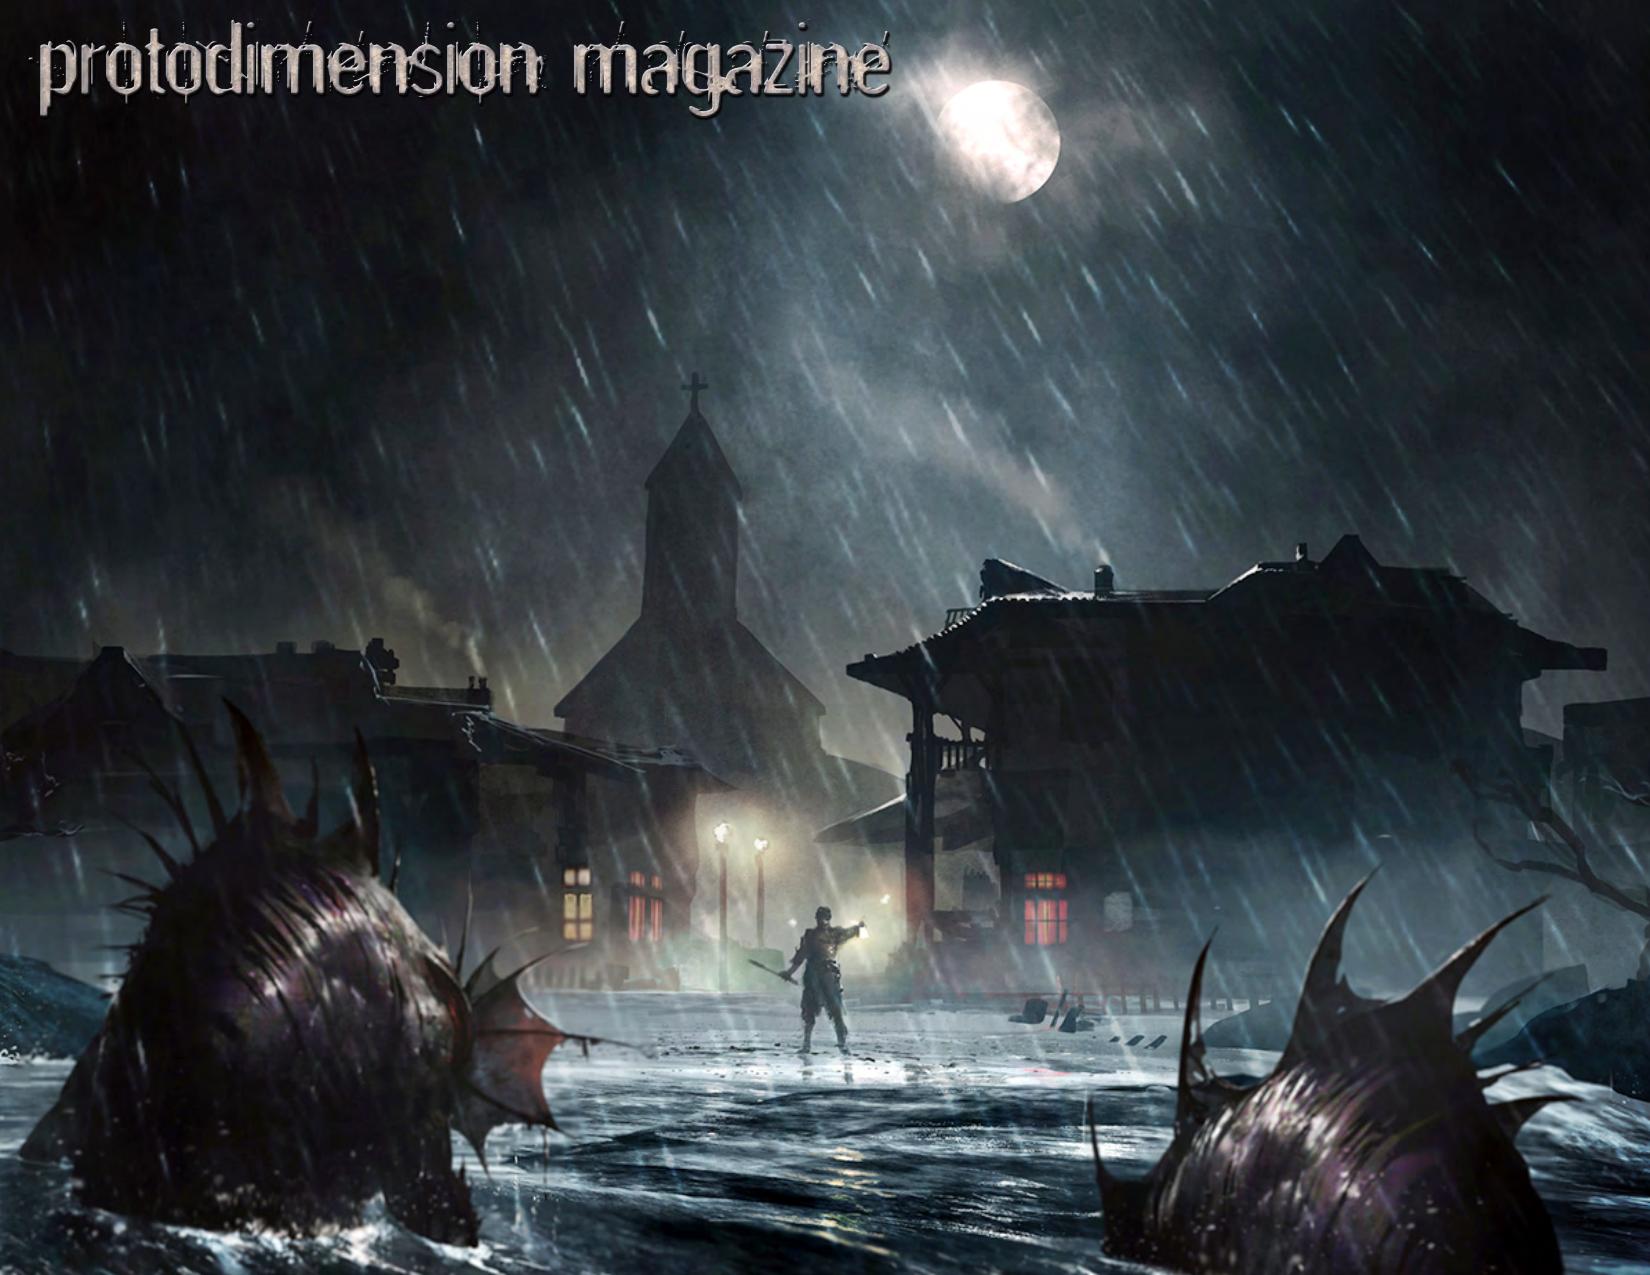 Protodimension Magazine #20 (Summer 2014)